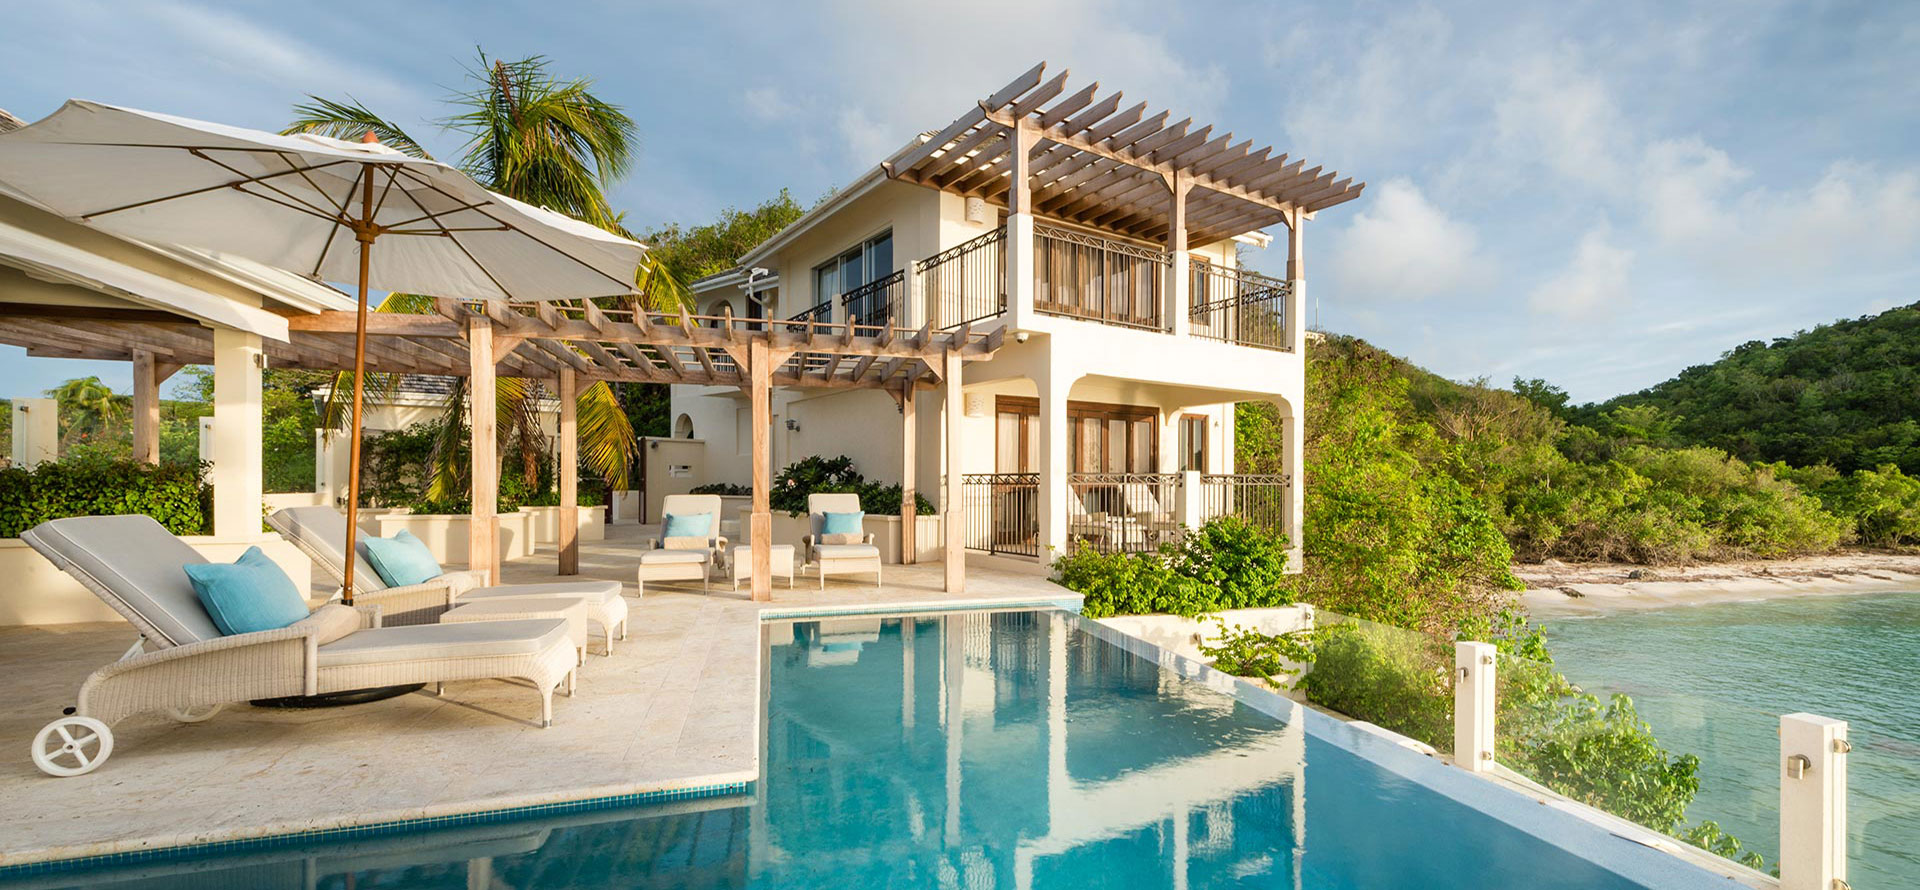 Antigua luxury resorts and outdoor swimming pool.